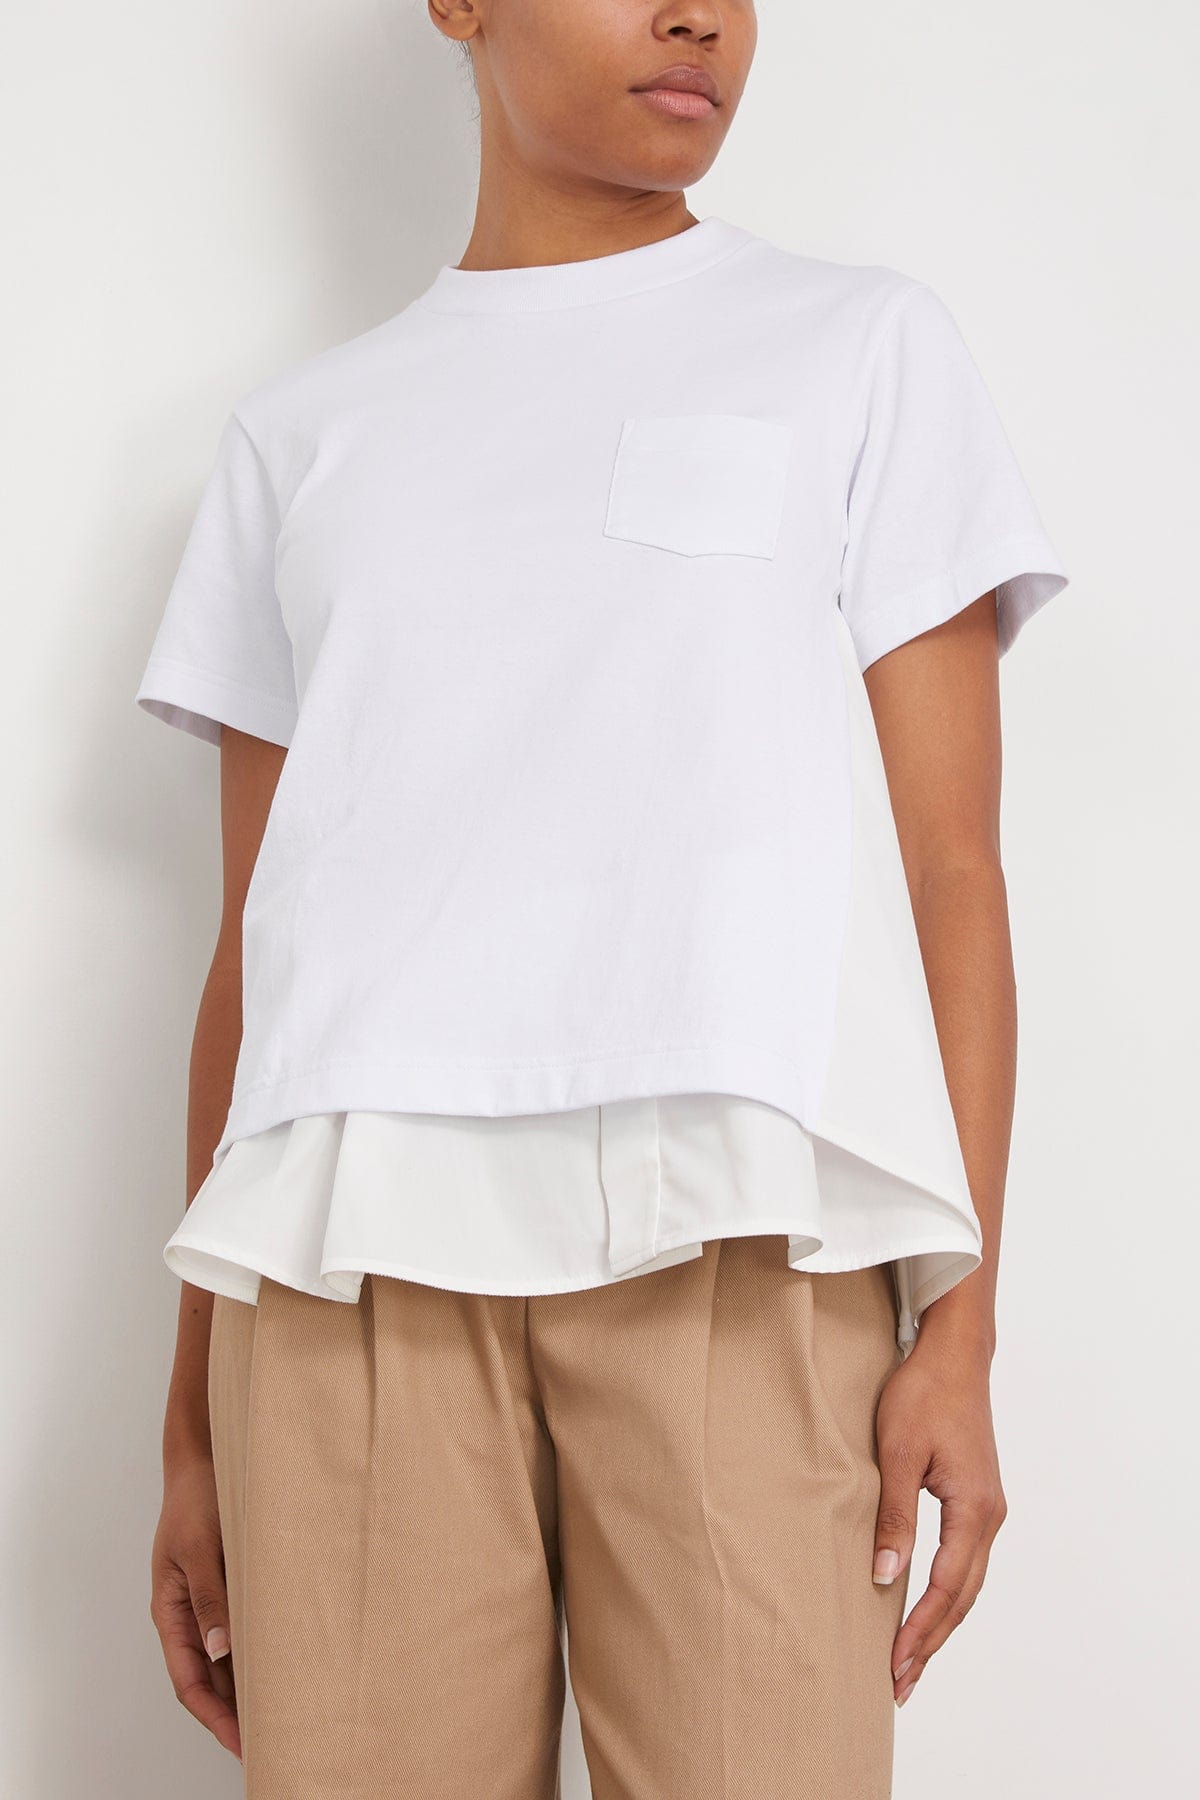 Sacai - Sacai Cotton Poplin Mix Cotton Jersey T-Shirt in White 4 / L - Hampden Clothing